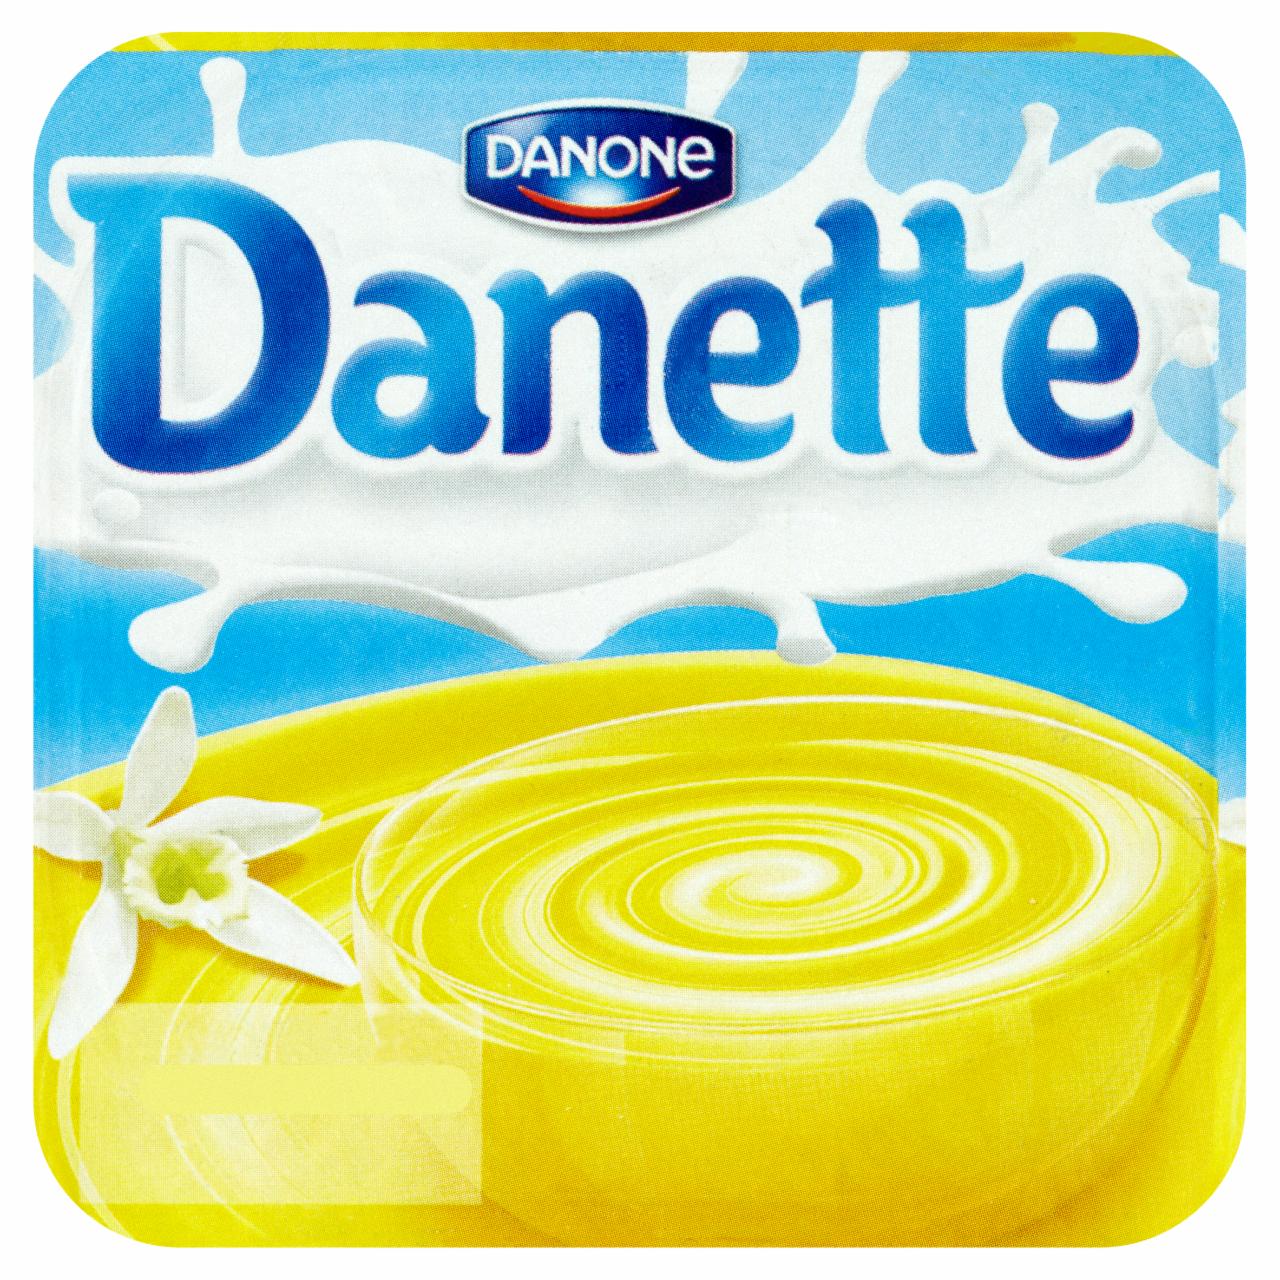 Képek - Danette vaníliaízű puding Danone